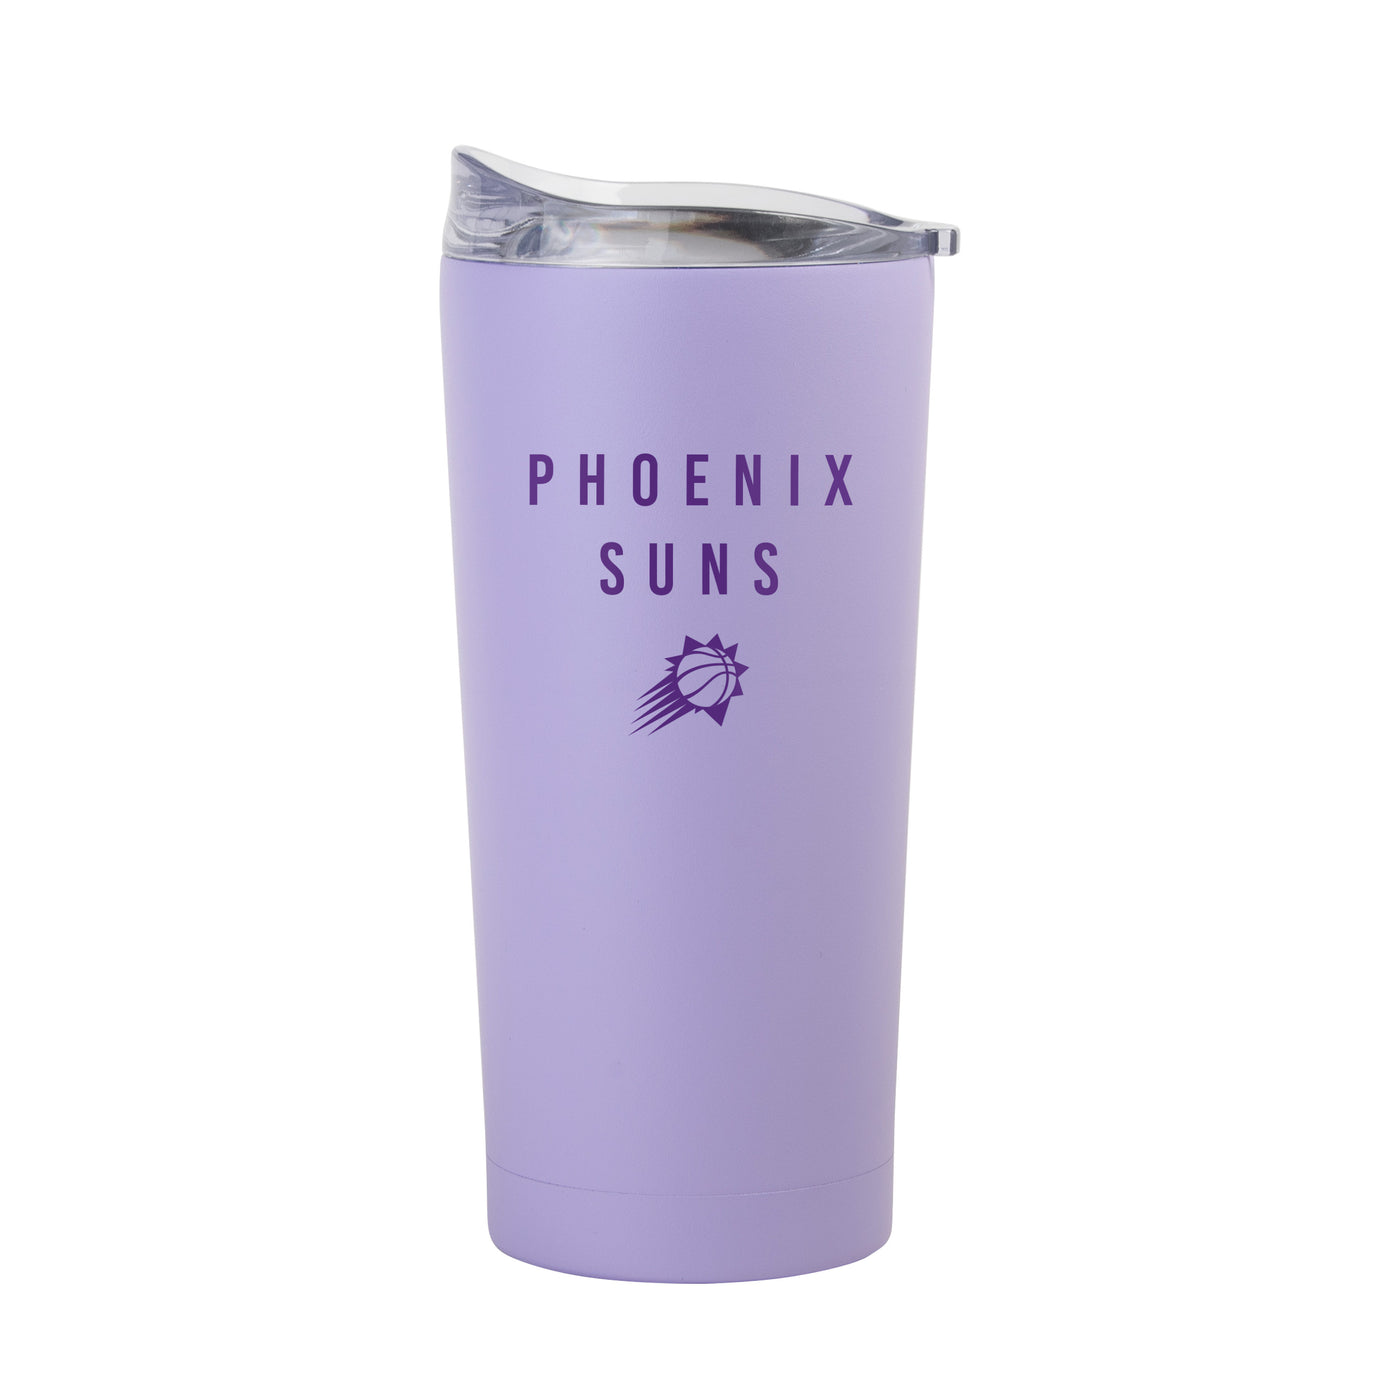 Phoenix Suns 20oz Tonal Lavender Powder Coat Tumbler